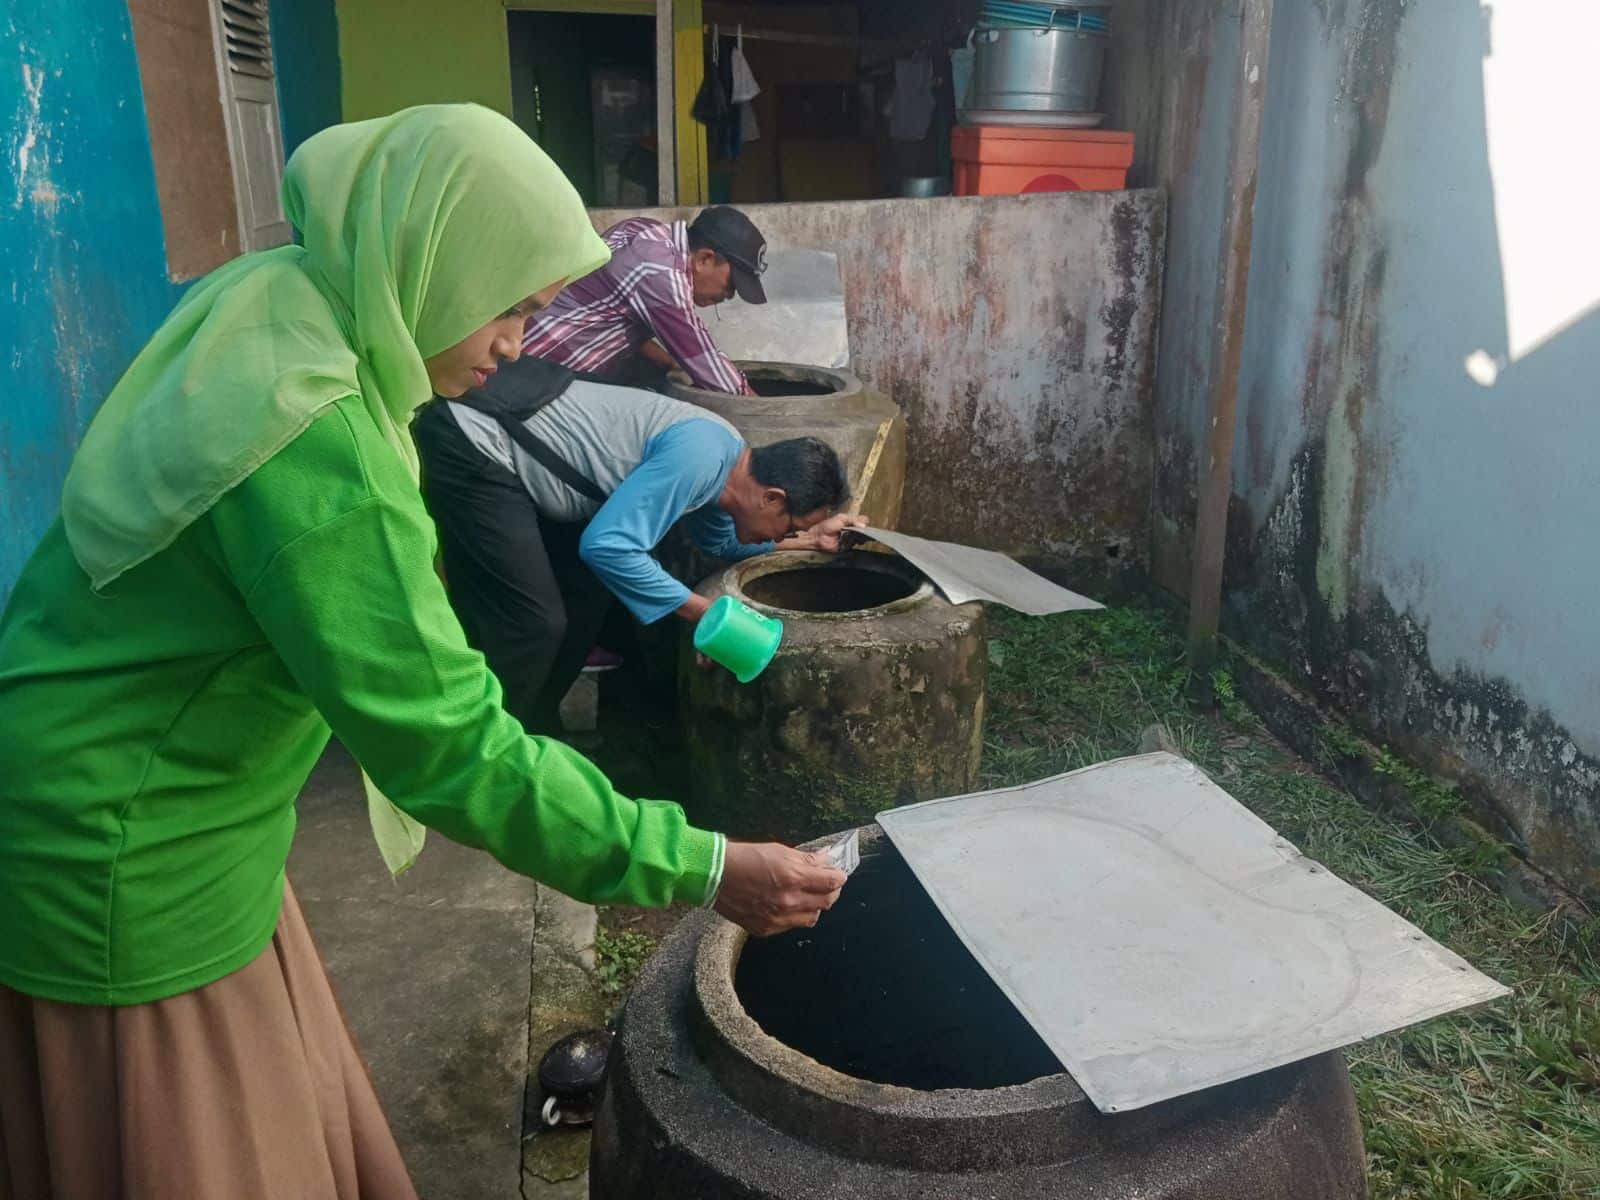 Penaburan bubuk abate sebagai salah satu upaya antisipasi perkembangbiakan nyamuk. (Foto: Indri)